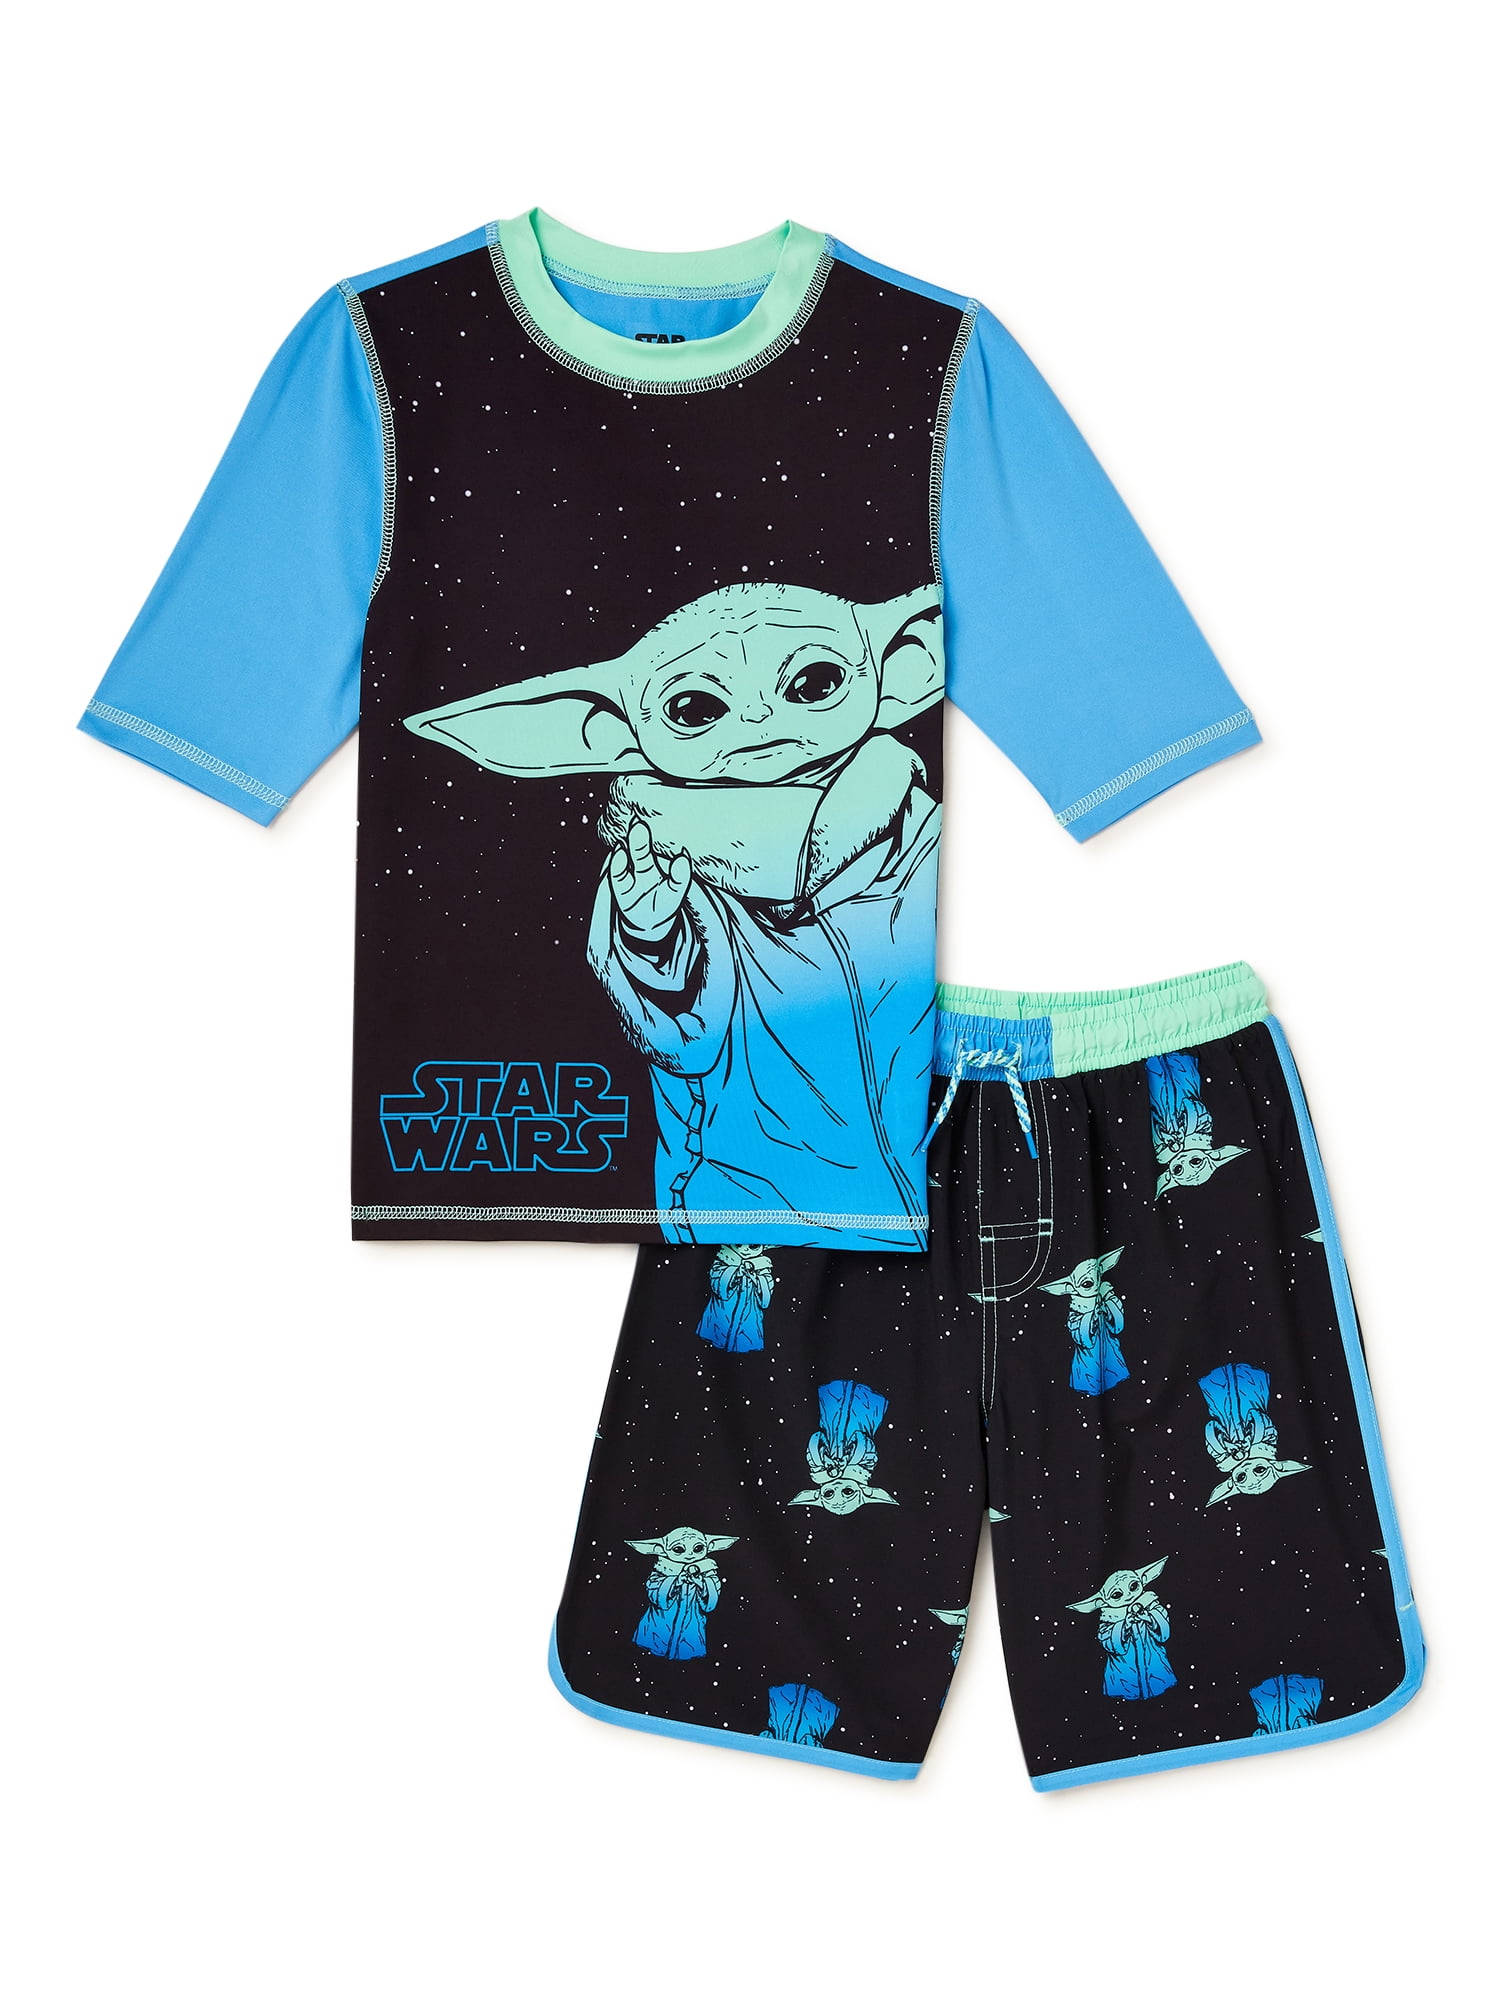 NWT Star Wars Mandalorian Baby Yoda The Child Rashguard Swim Set Toddler Boy 